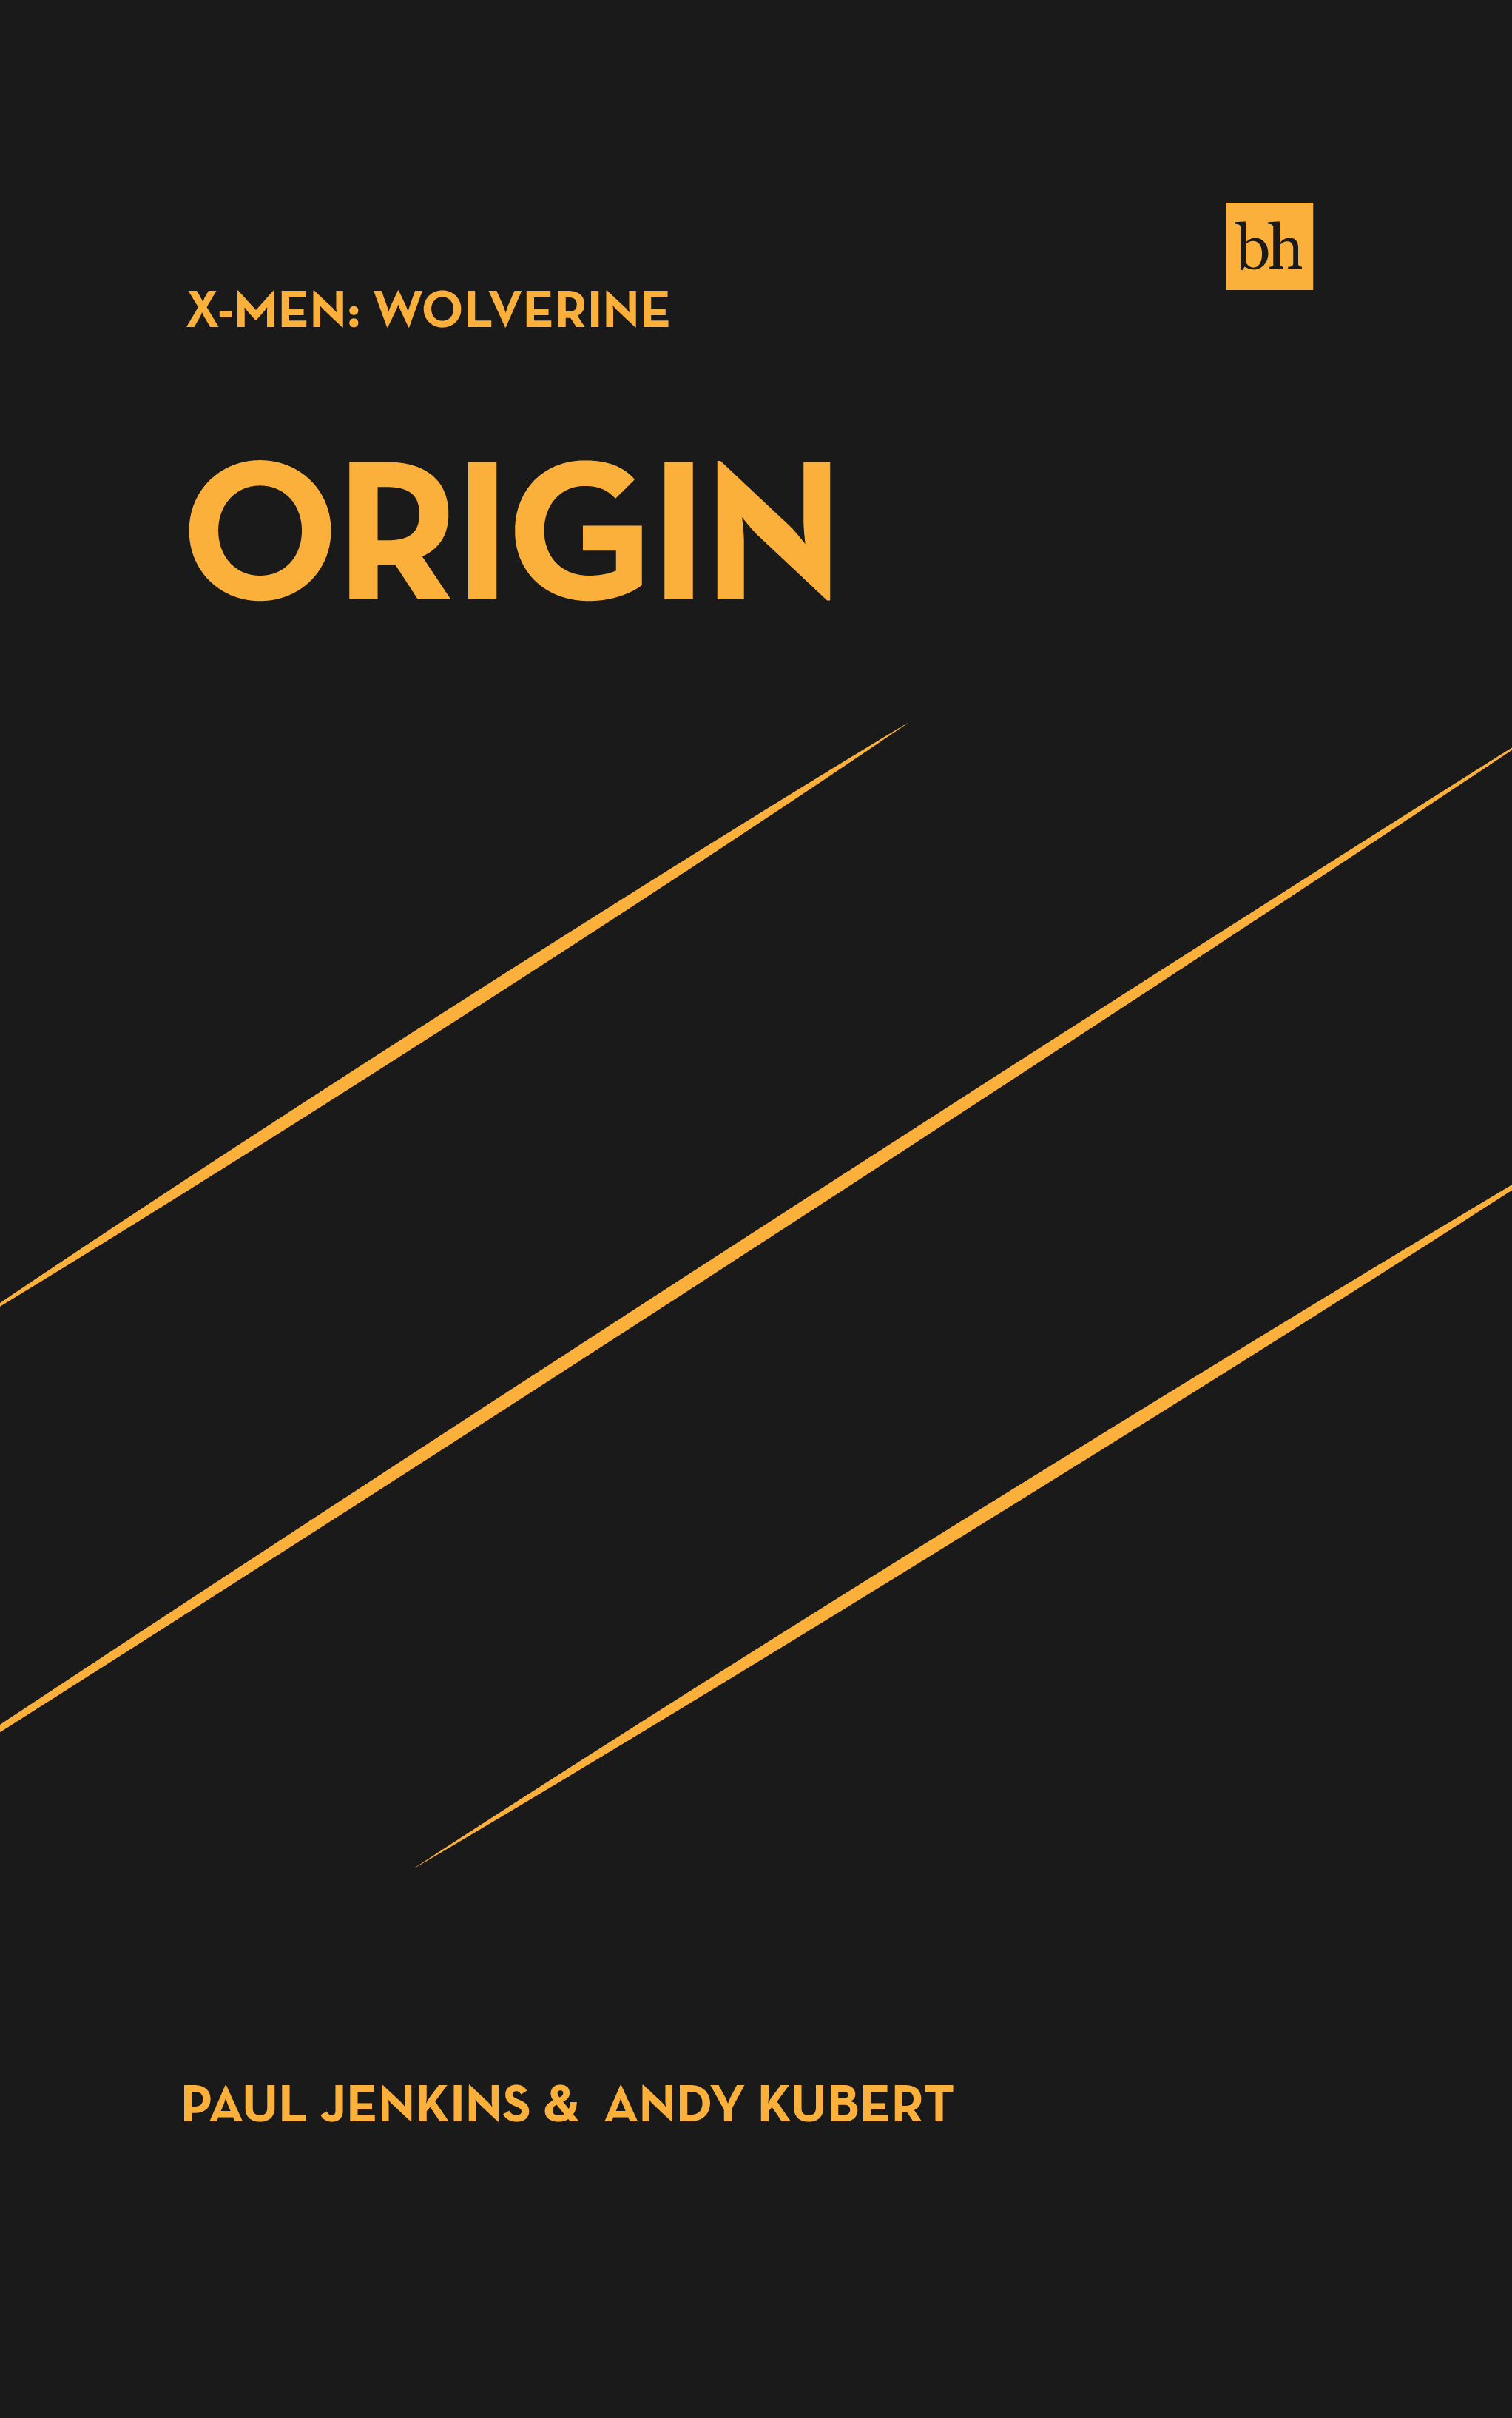 Book cover mock thumbnail for X-Men Wolverine: Origin